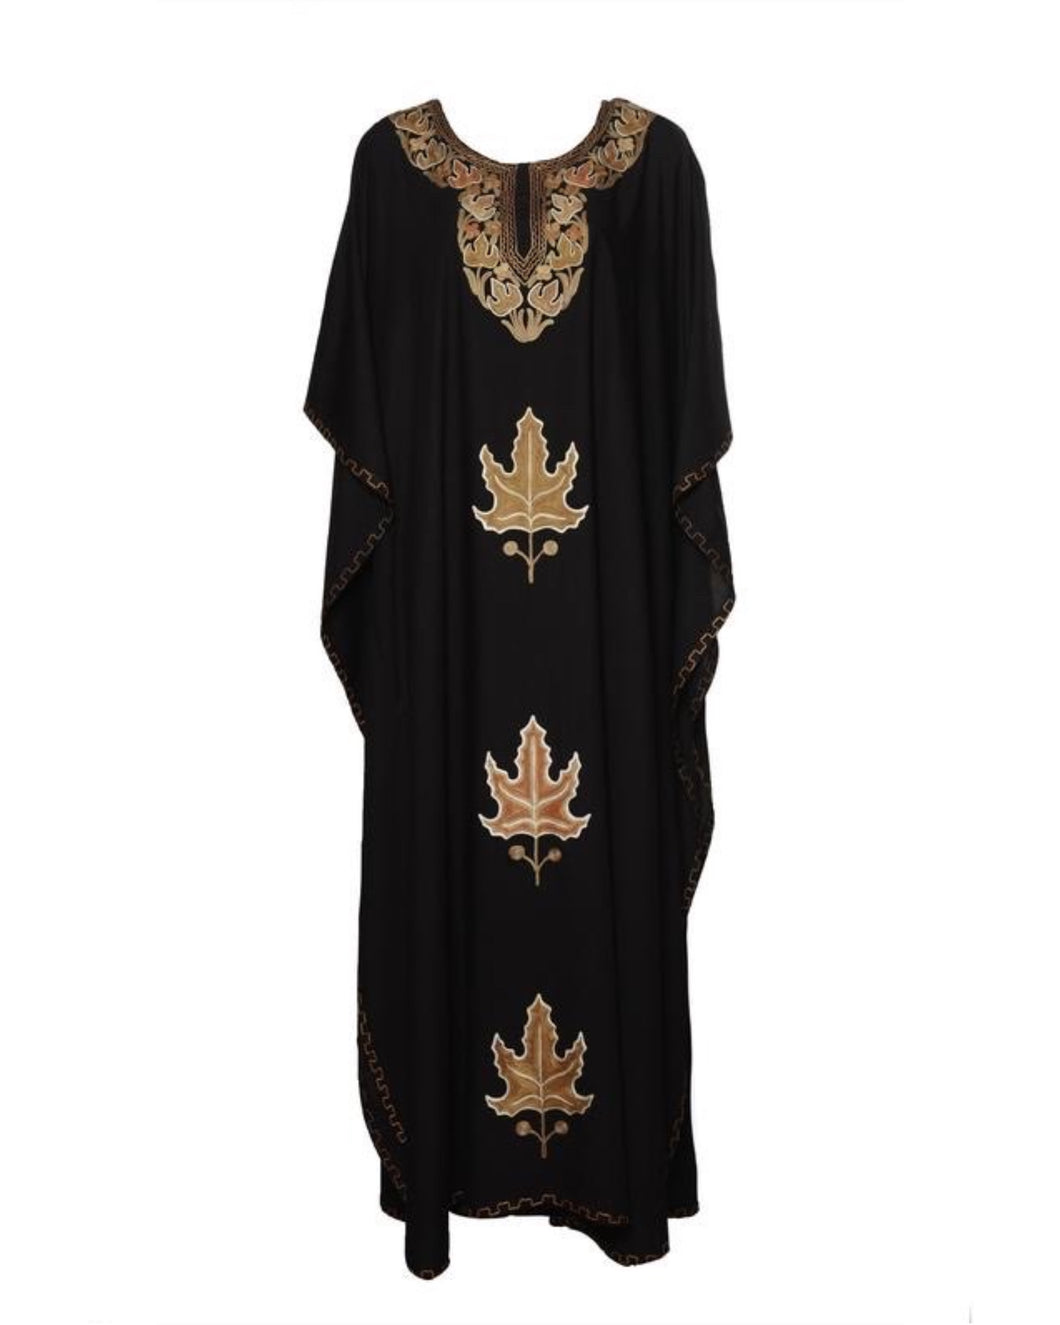 Kaftan Dress (Black with Red Leaves)